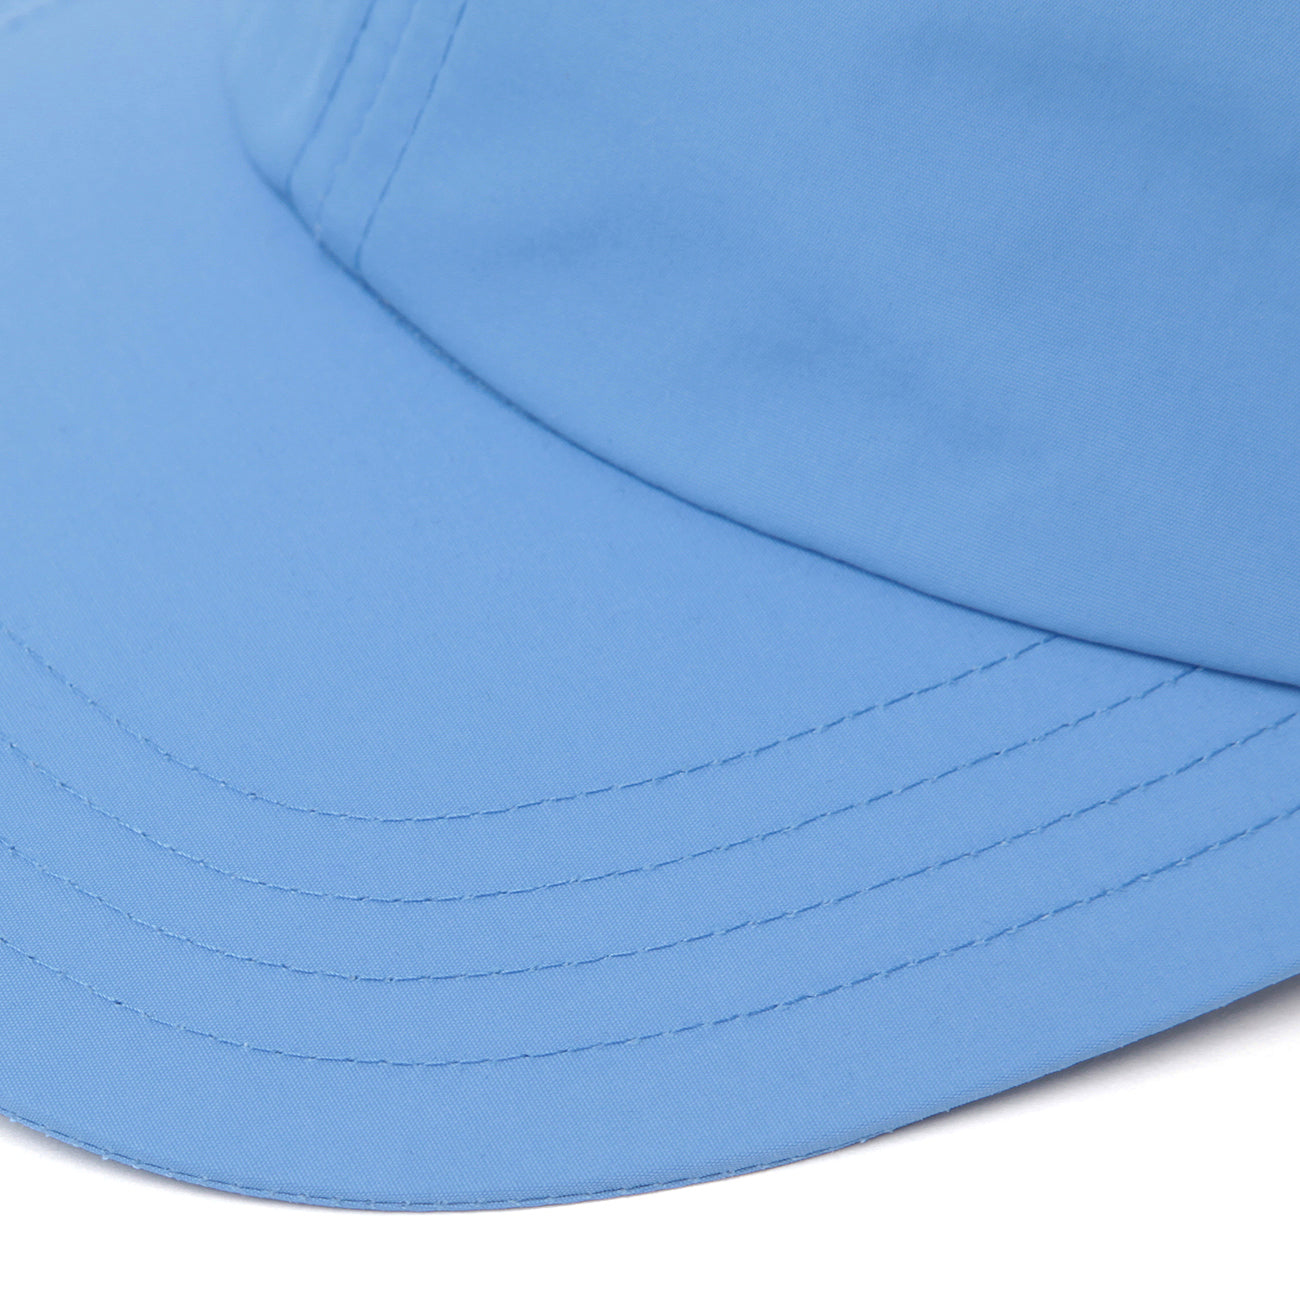 KED CAP (BOARD) - SAX BLUE